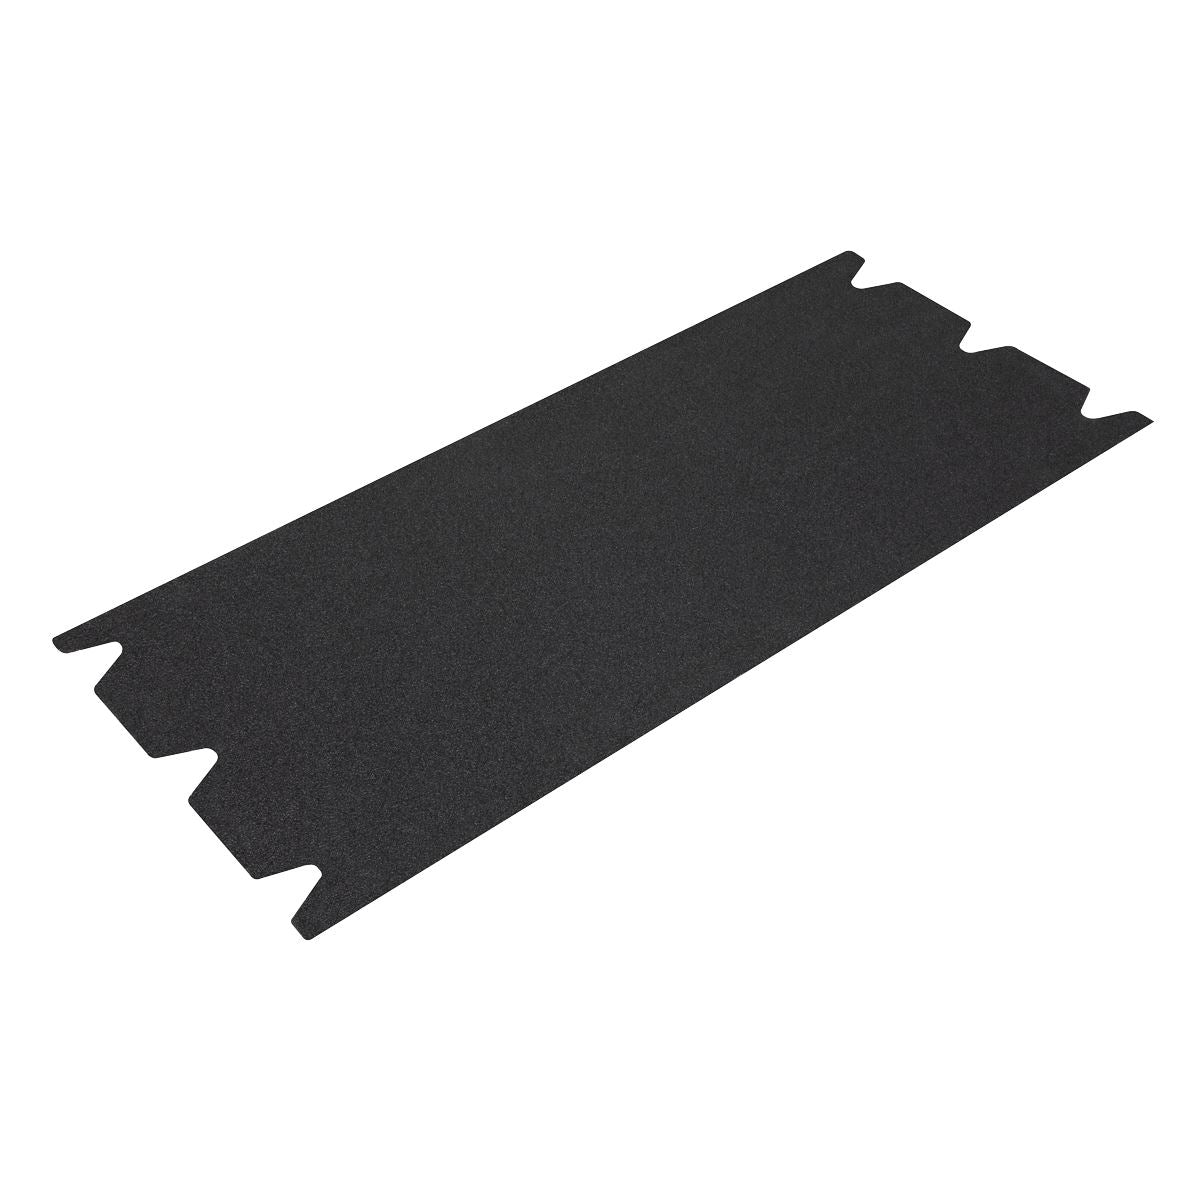 Sealey Floor Sanding Sheet 203 x 495mm 60Grit - Pack of 25